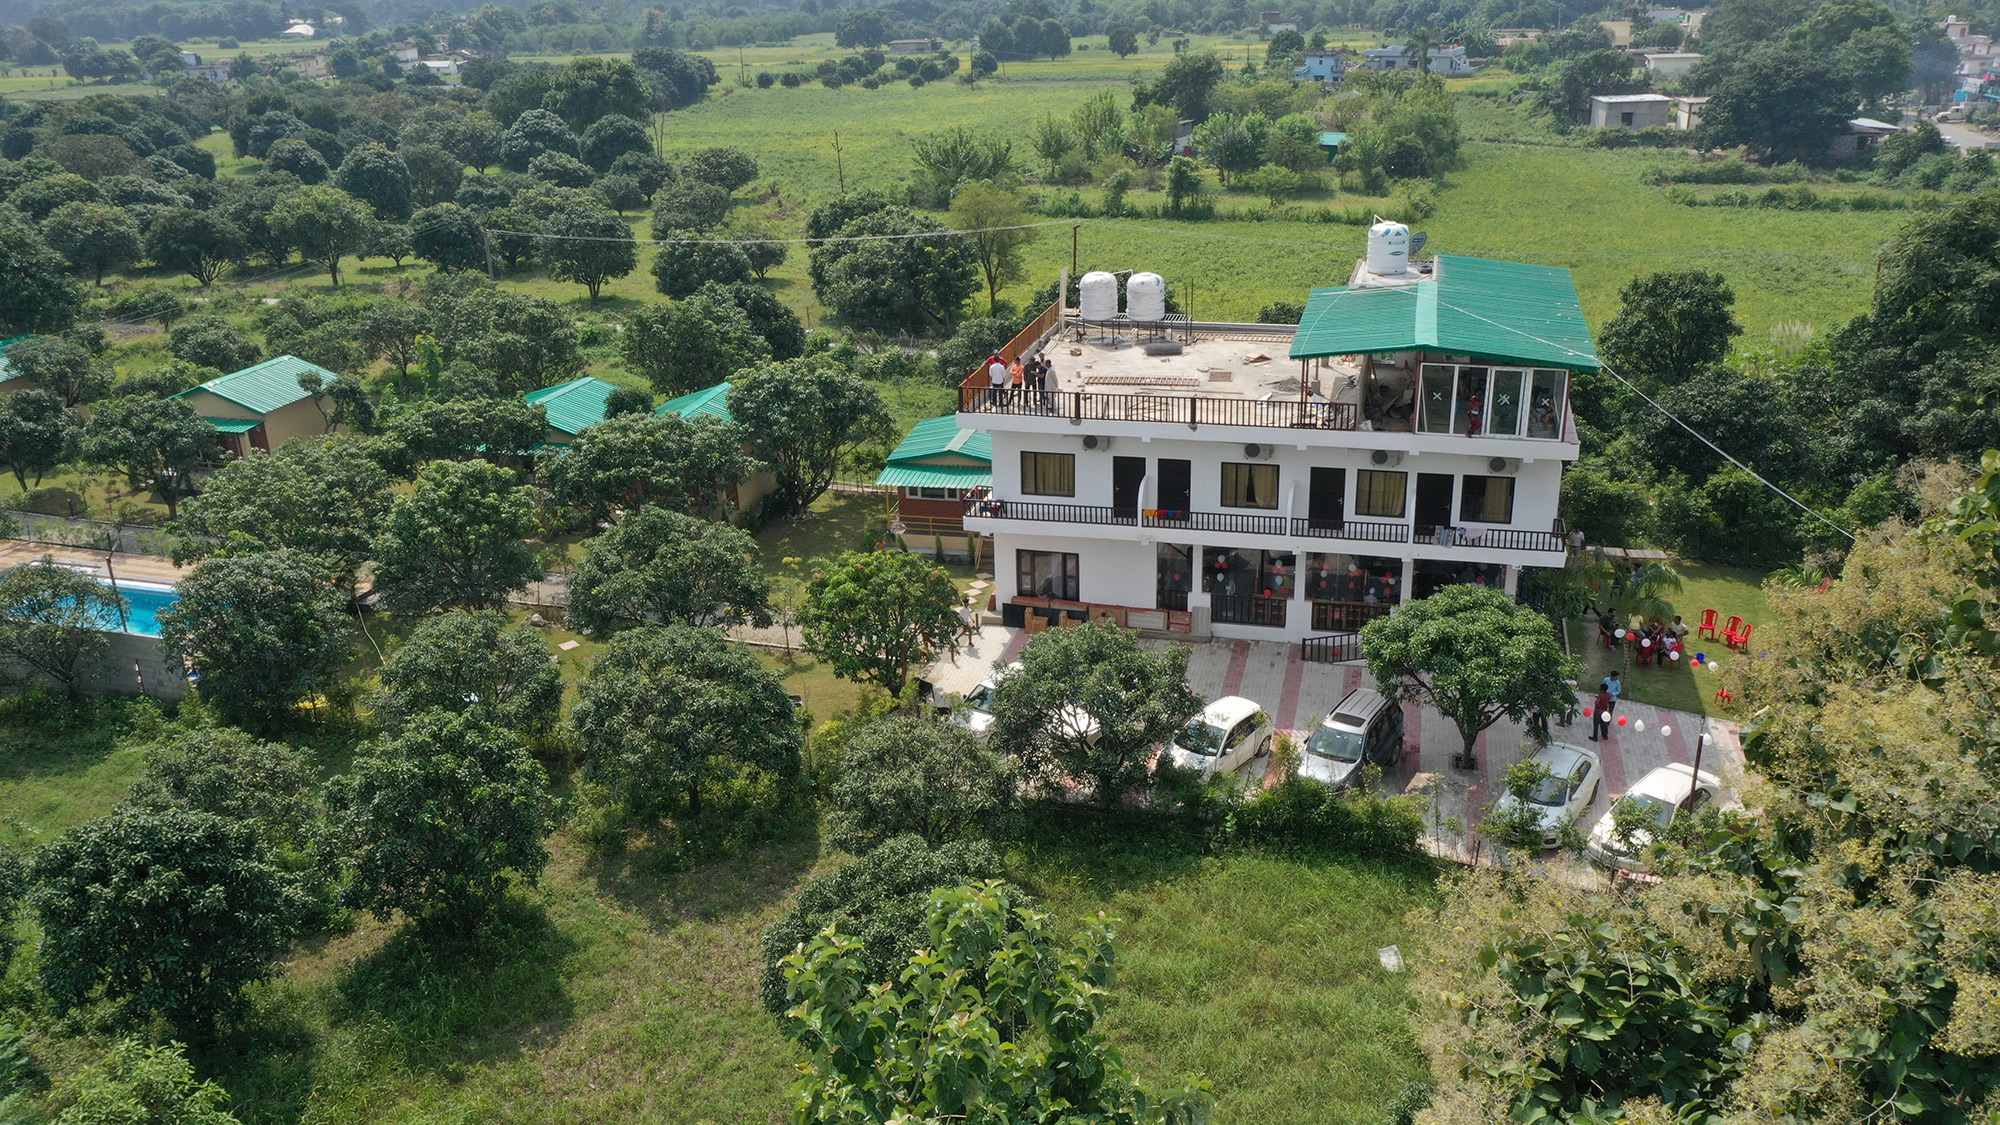 Seven Corbett resort in Pawalgarh